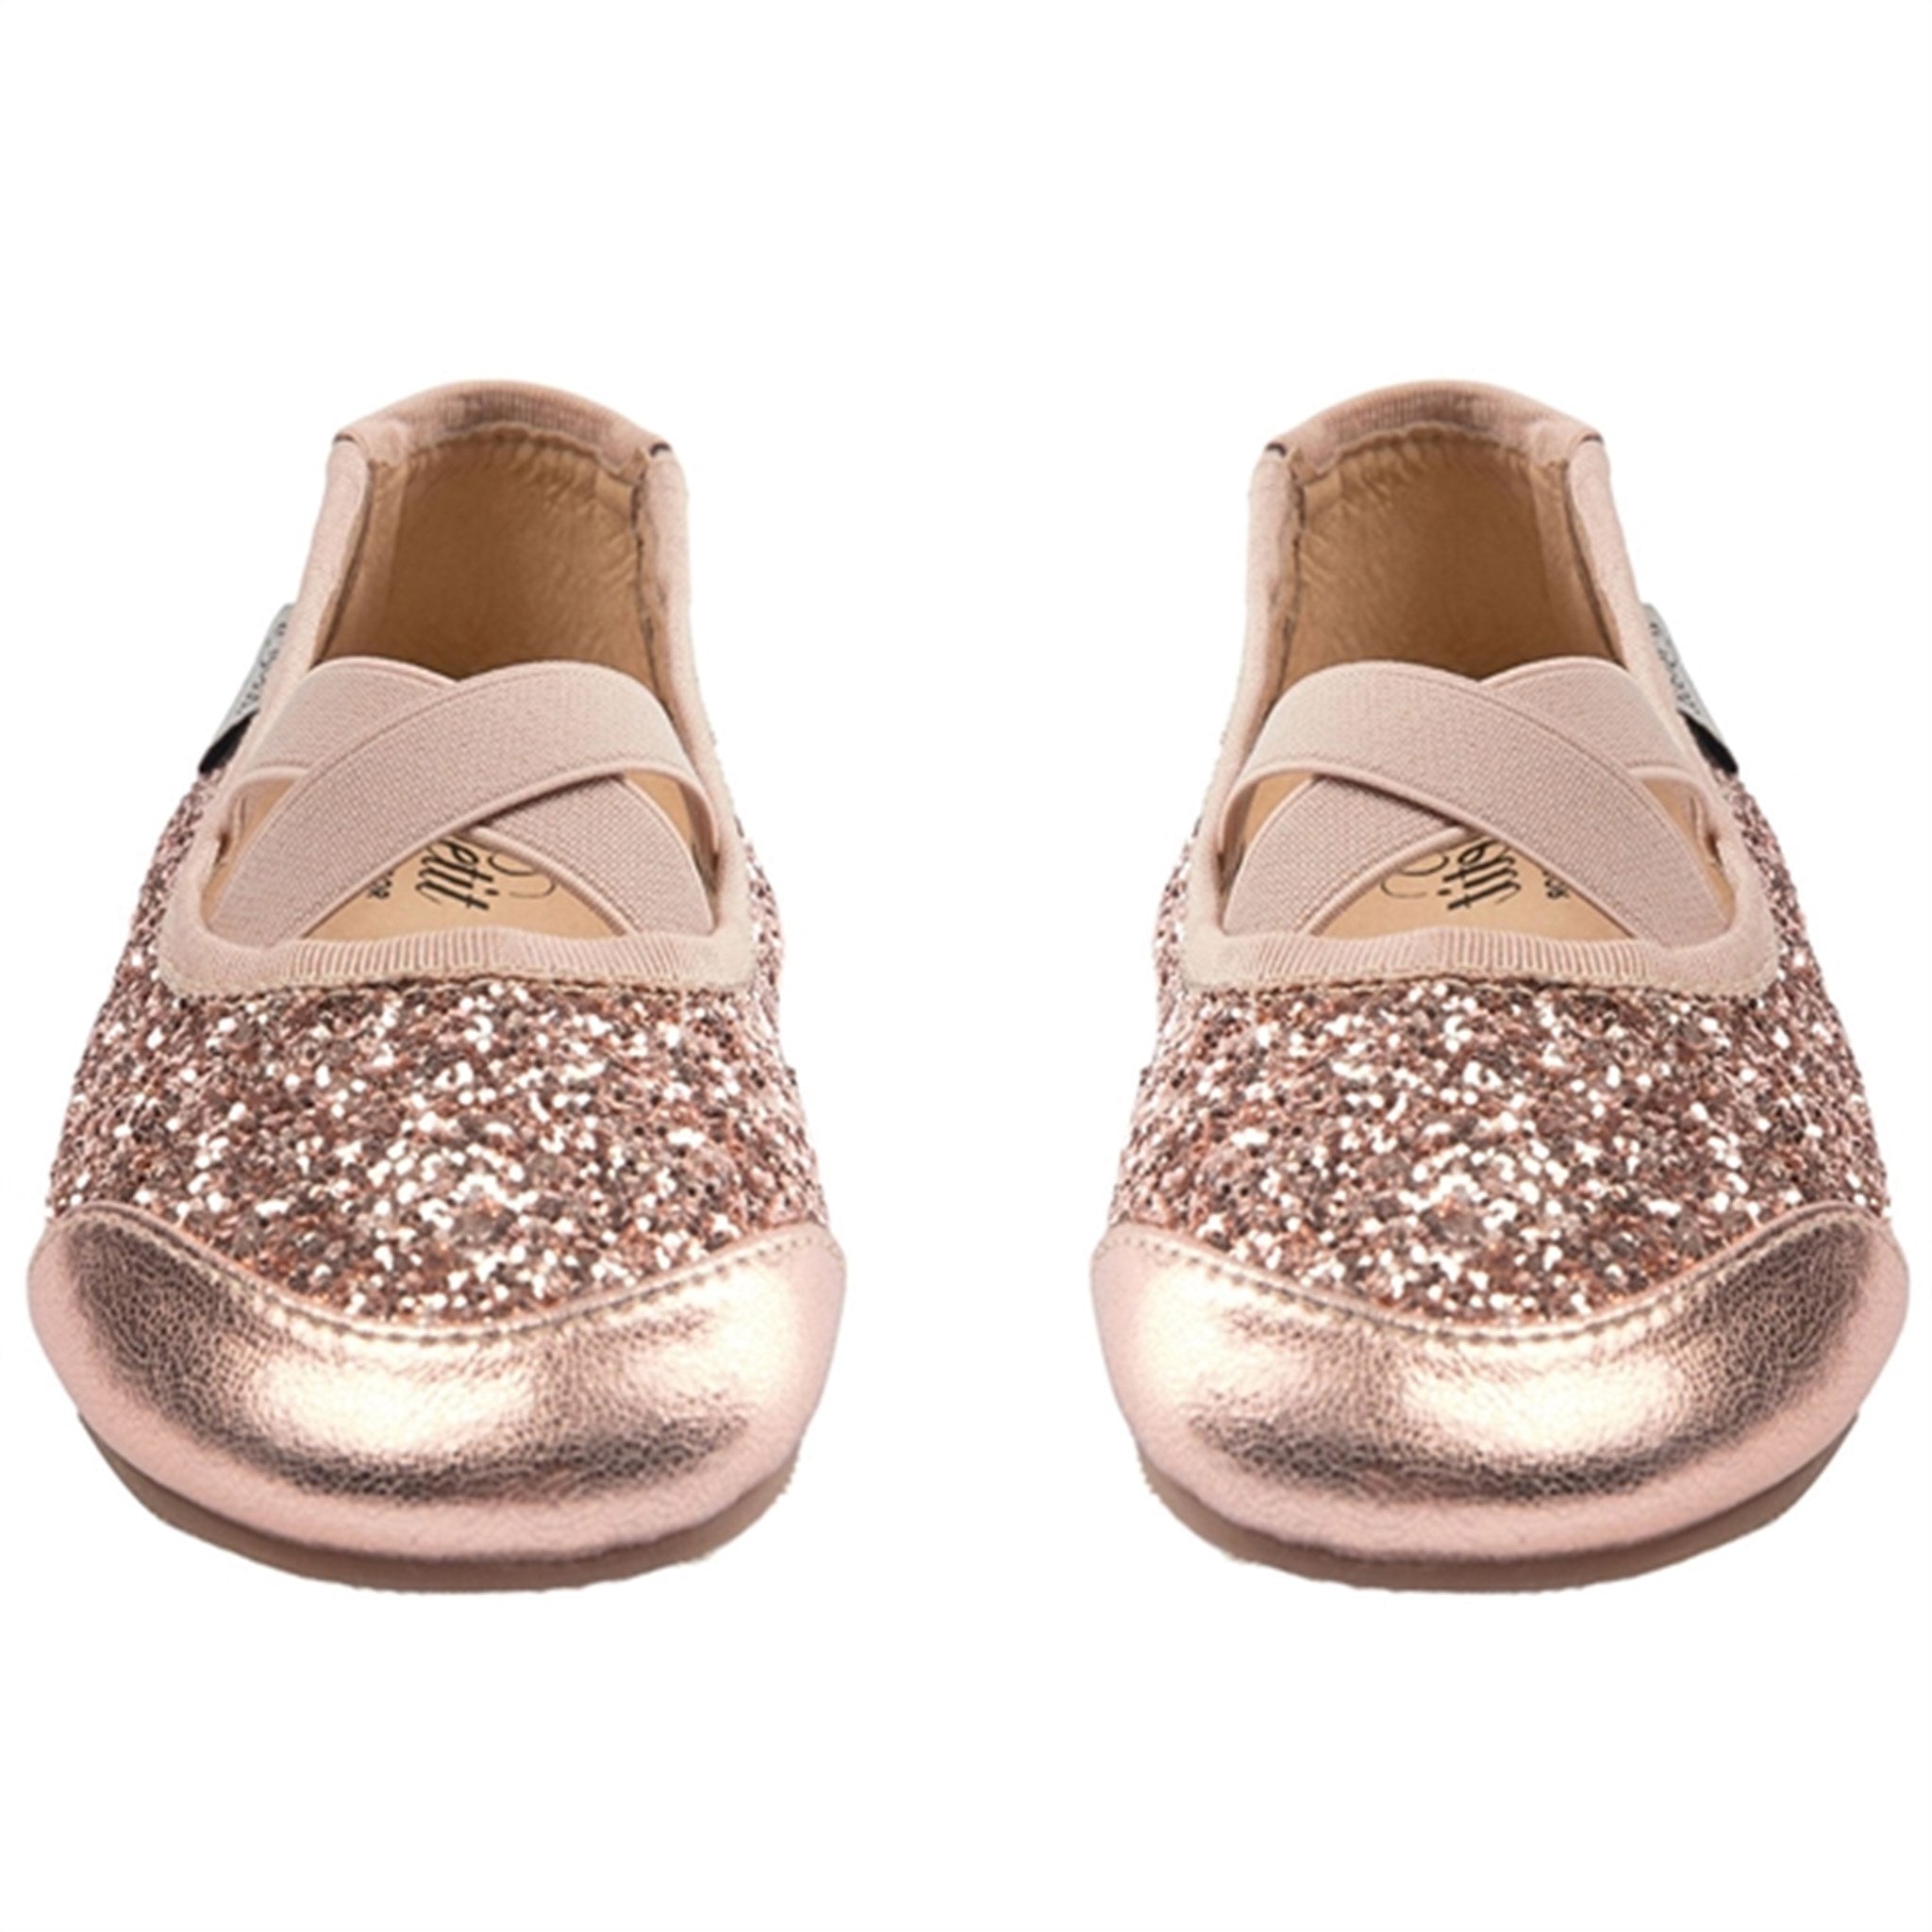 Petit by Sofie Schnoor Ballerina Indoors Shoes Peach 3